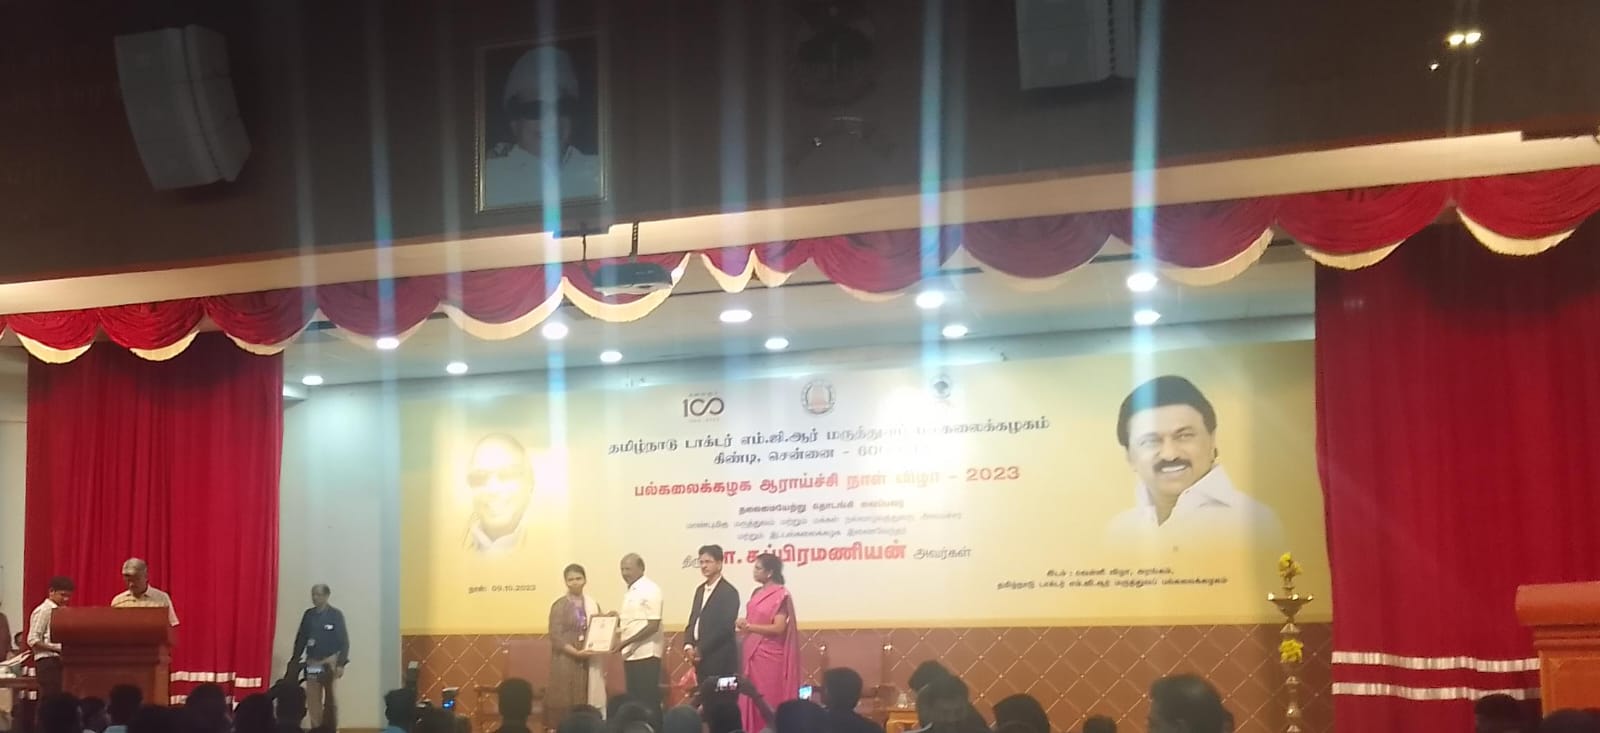 University topper Ms V. Anandhi (2017-21 Batch) has received Medal